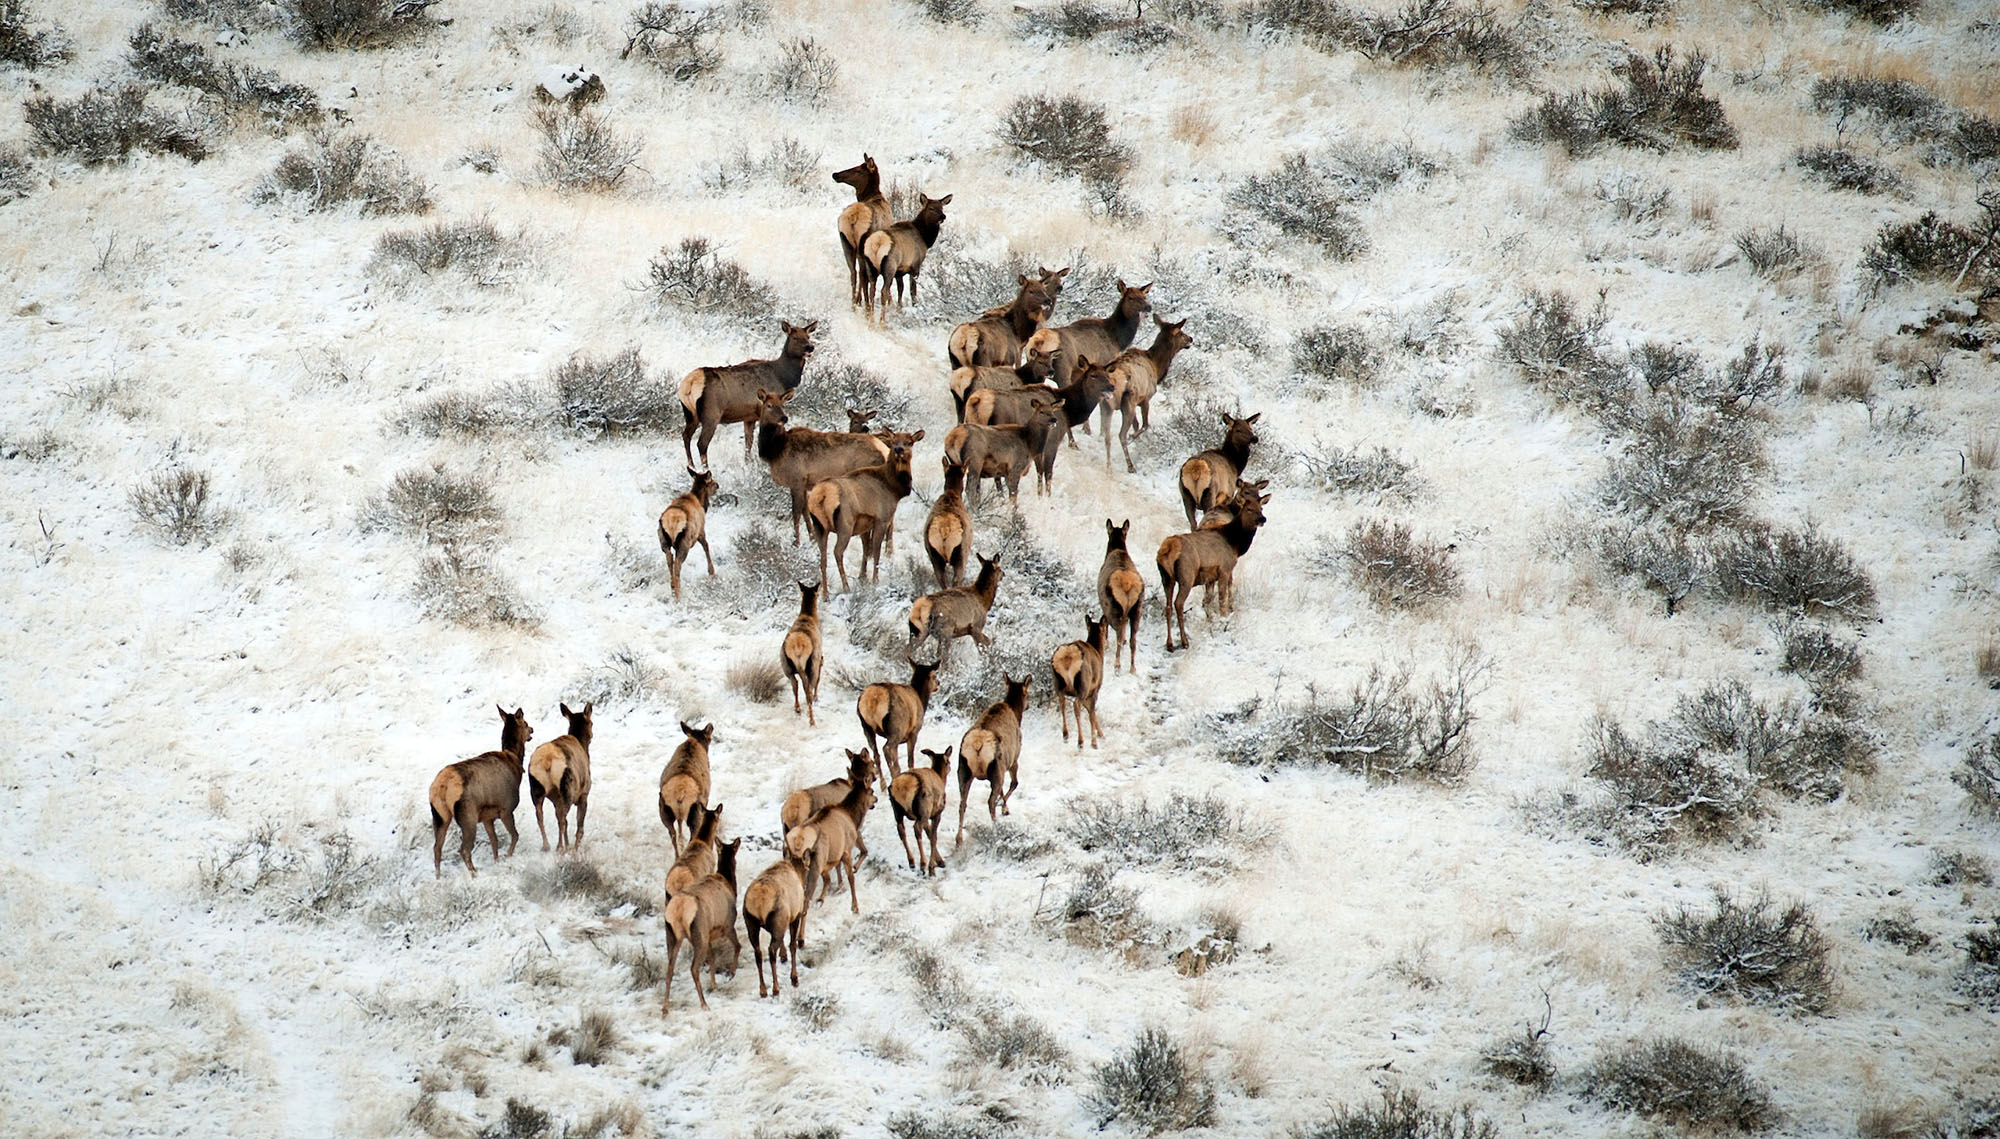 A herd of elk mills around on a snowy plain.